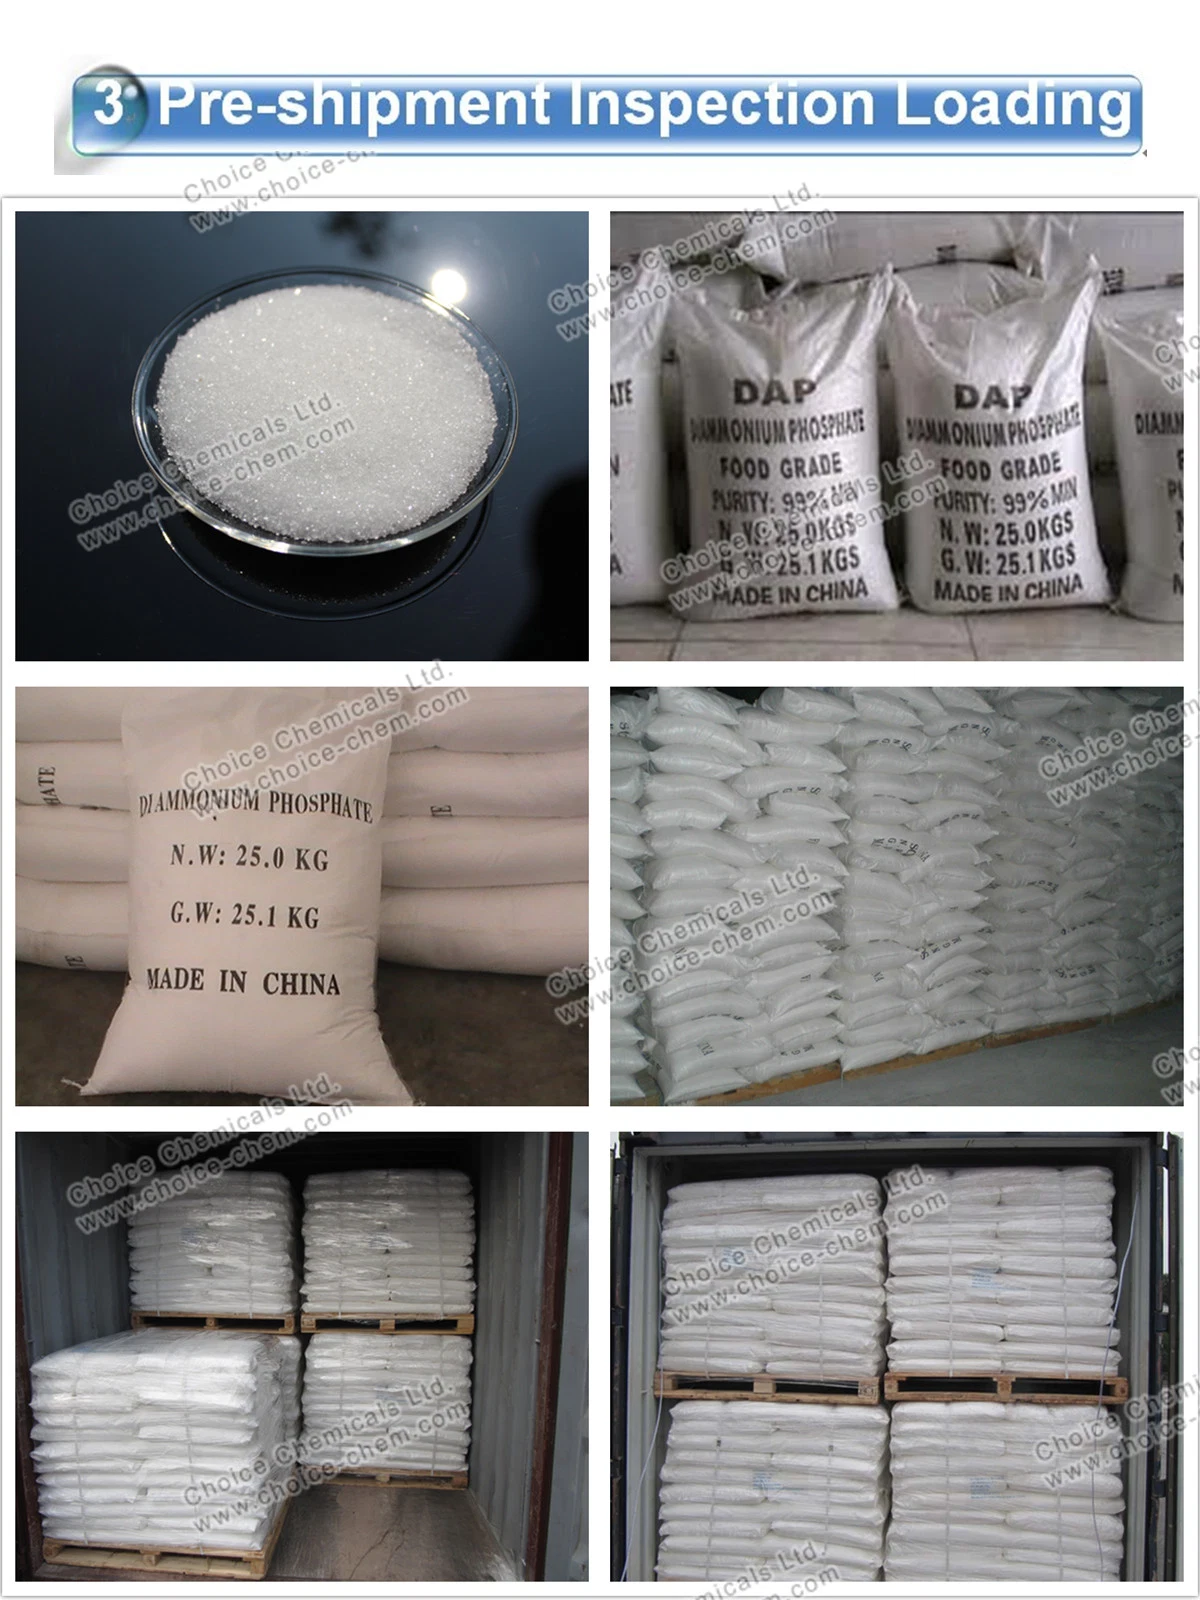 China Supplier of DAP 21-53-0 CAS 7783 28 0 Diammonium Phosphate Phosphate Fertilizer